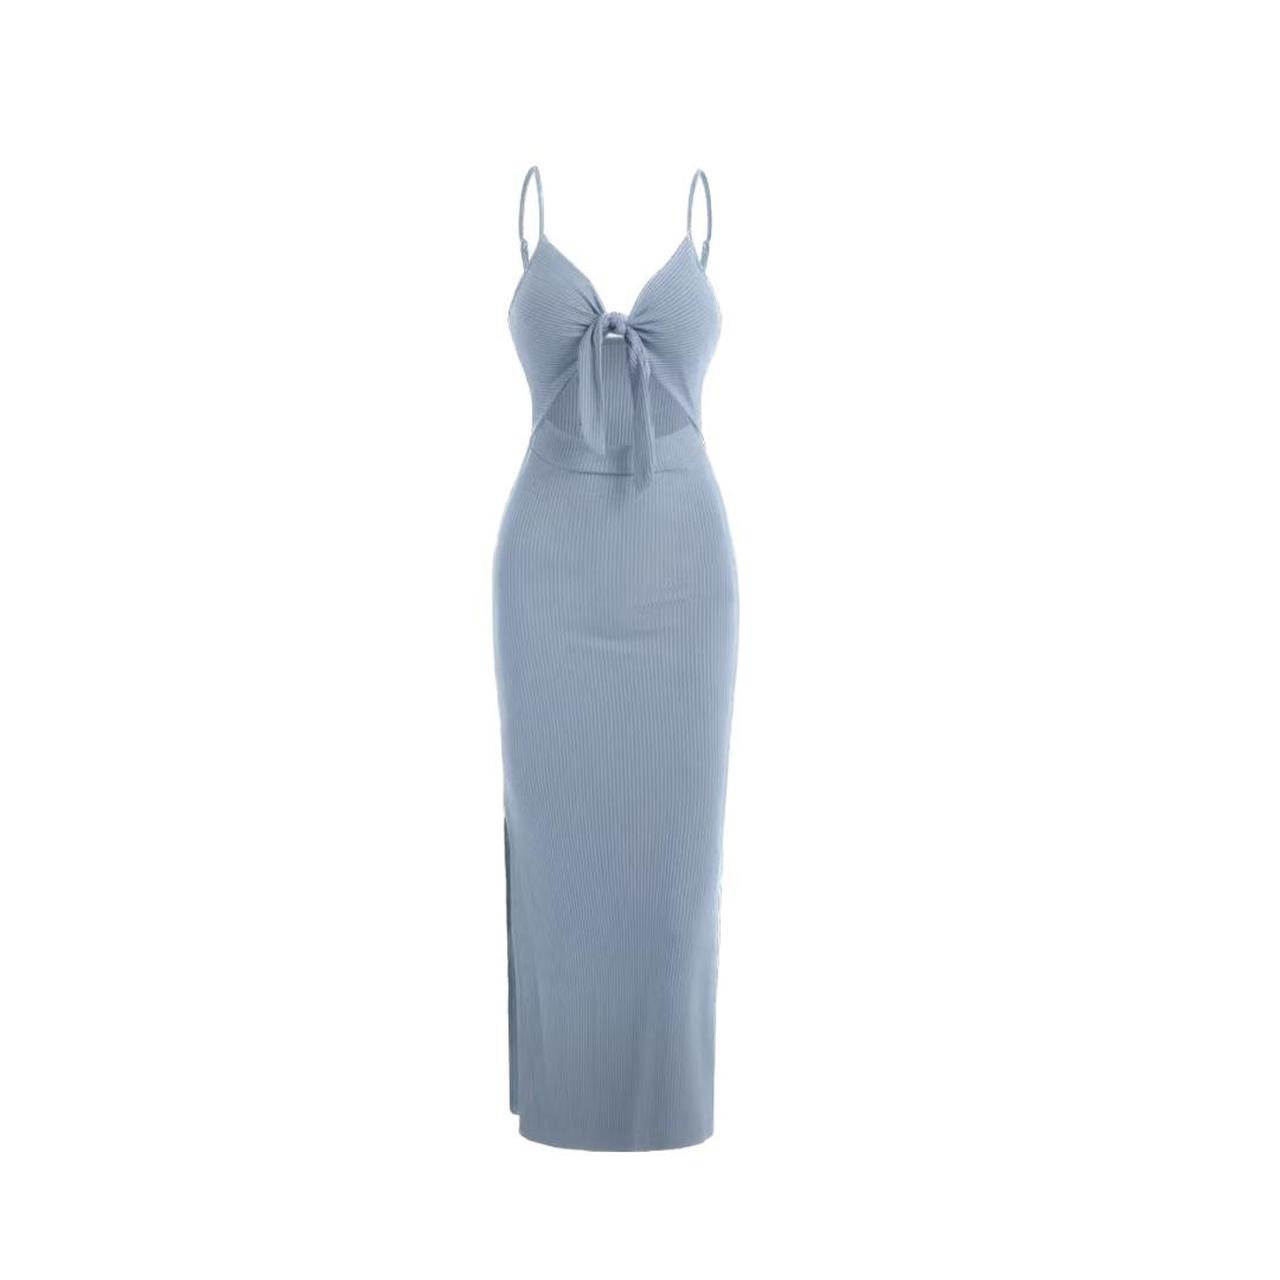 Femme Luxe Women's Blue Dress